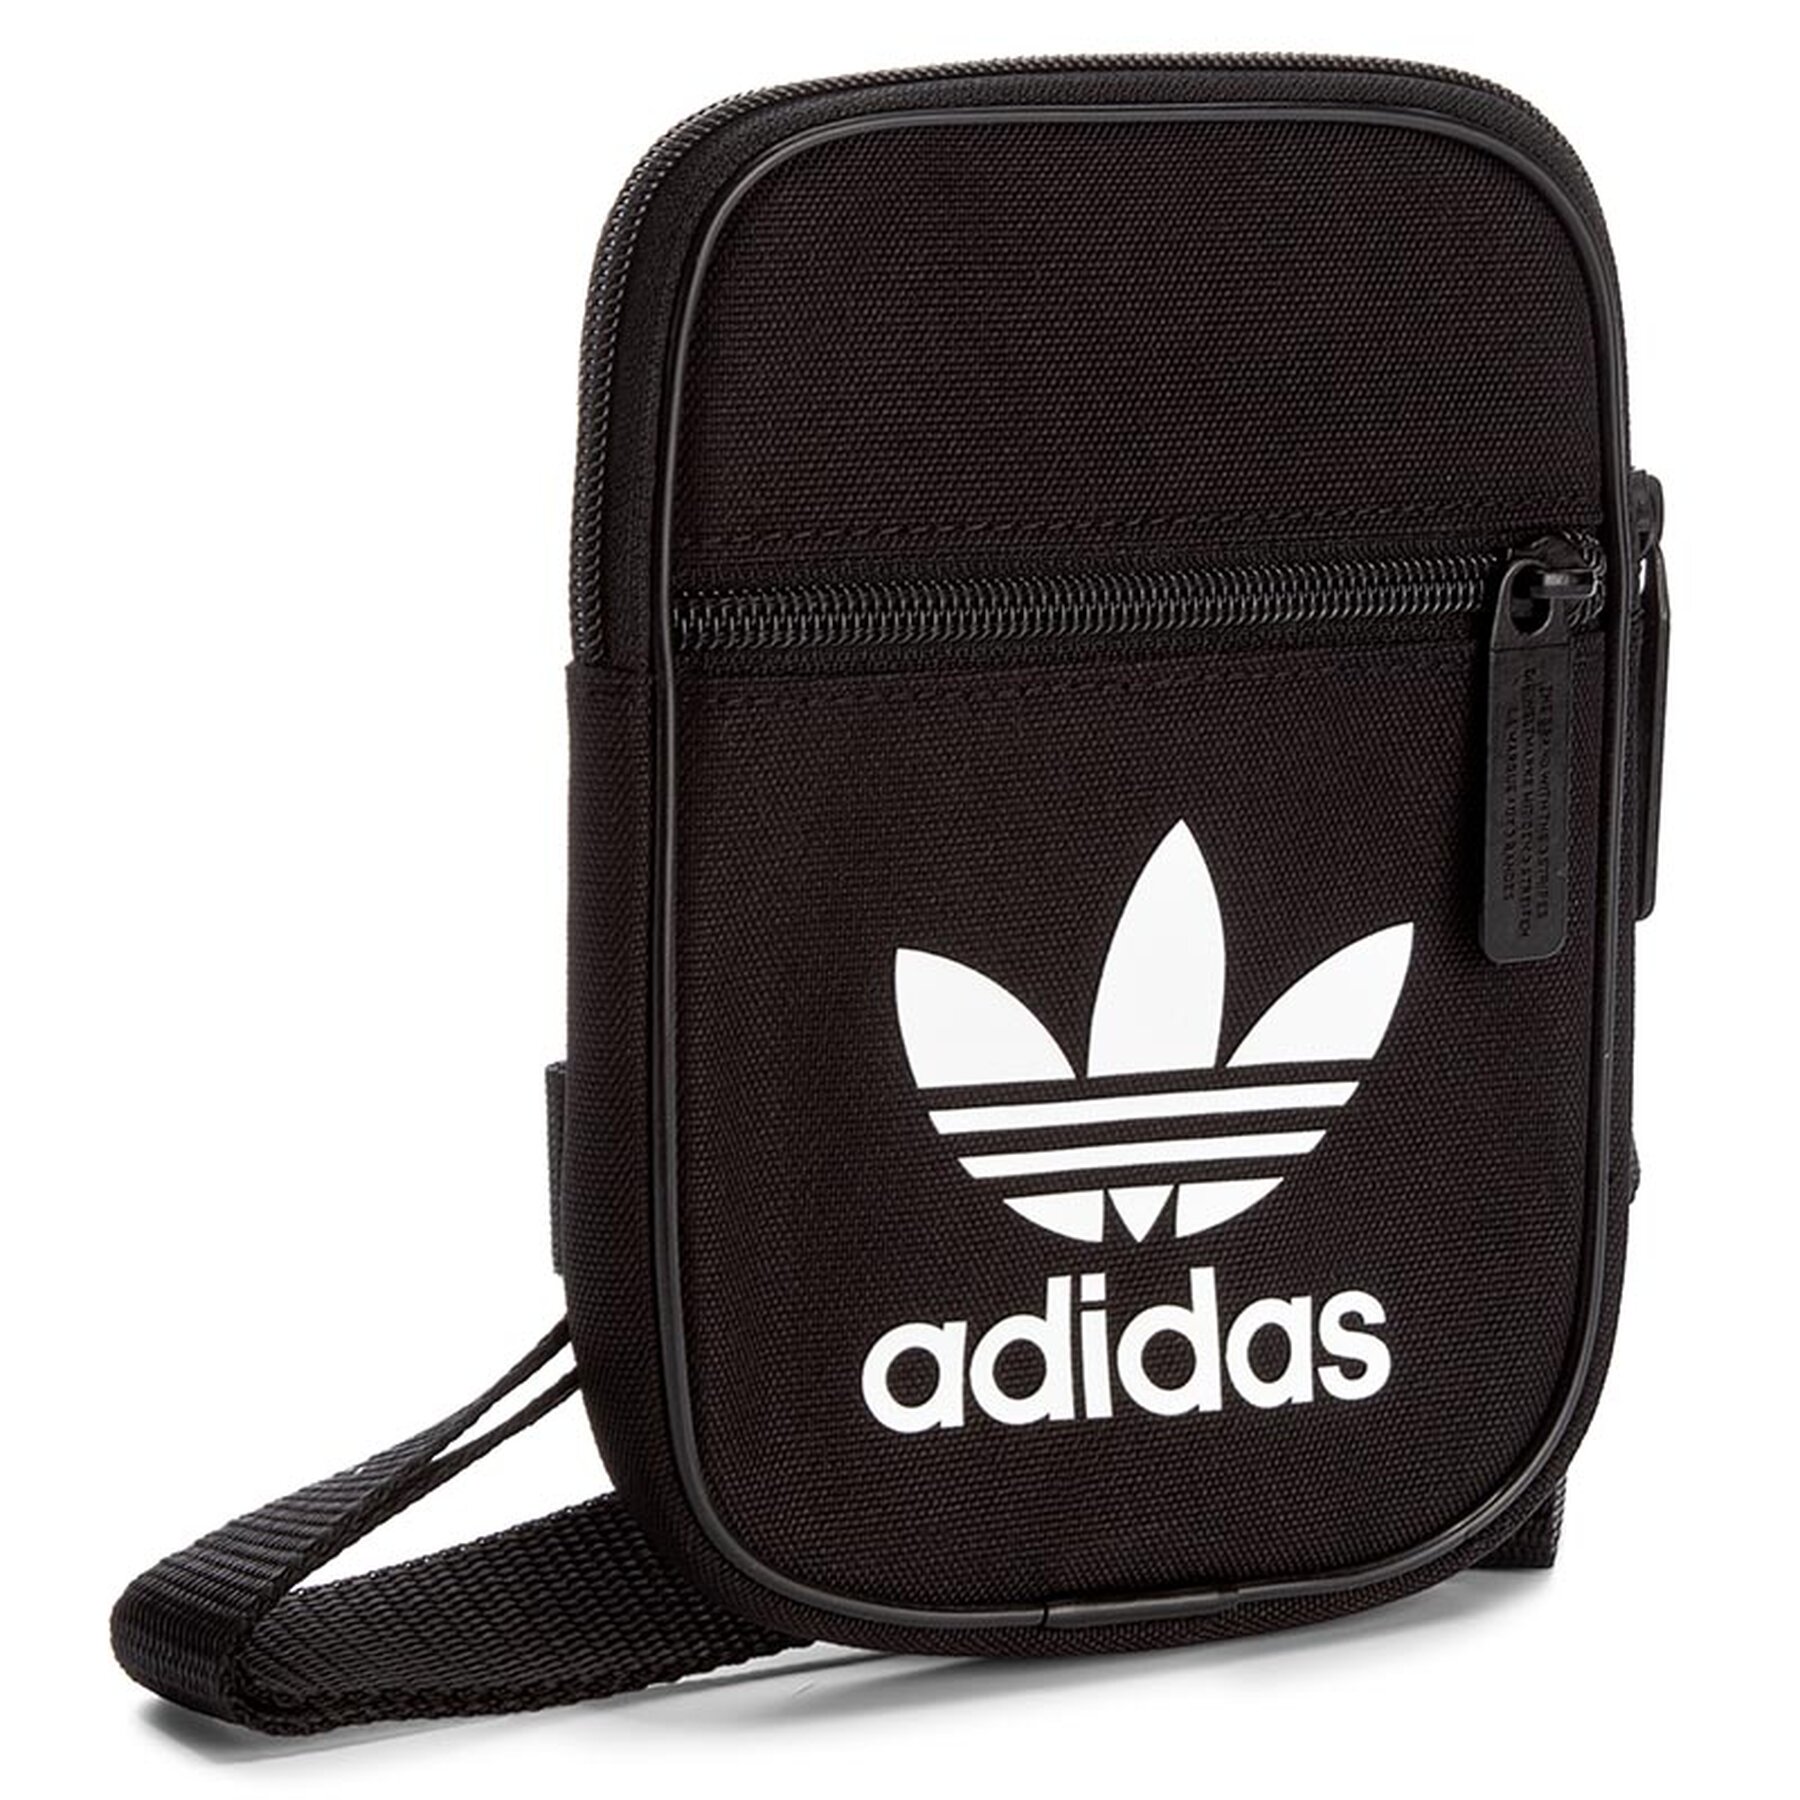 Comprar en oferta Adidas Festival Bag black (BK6730)